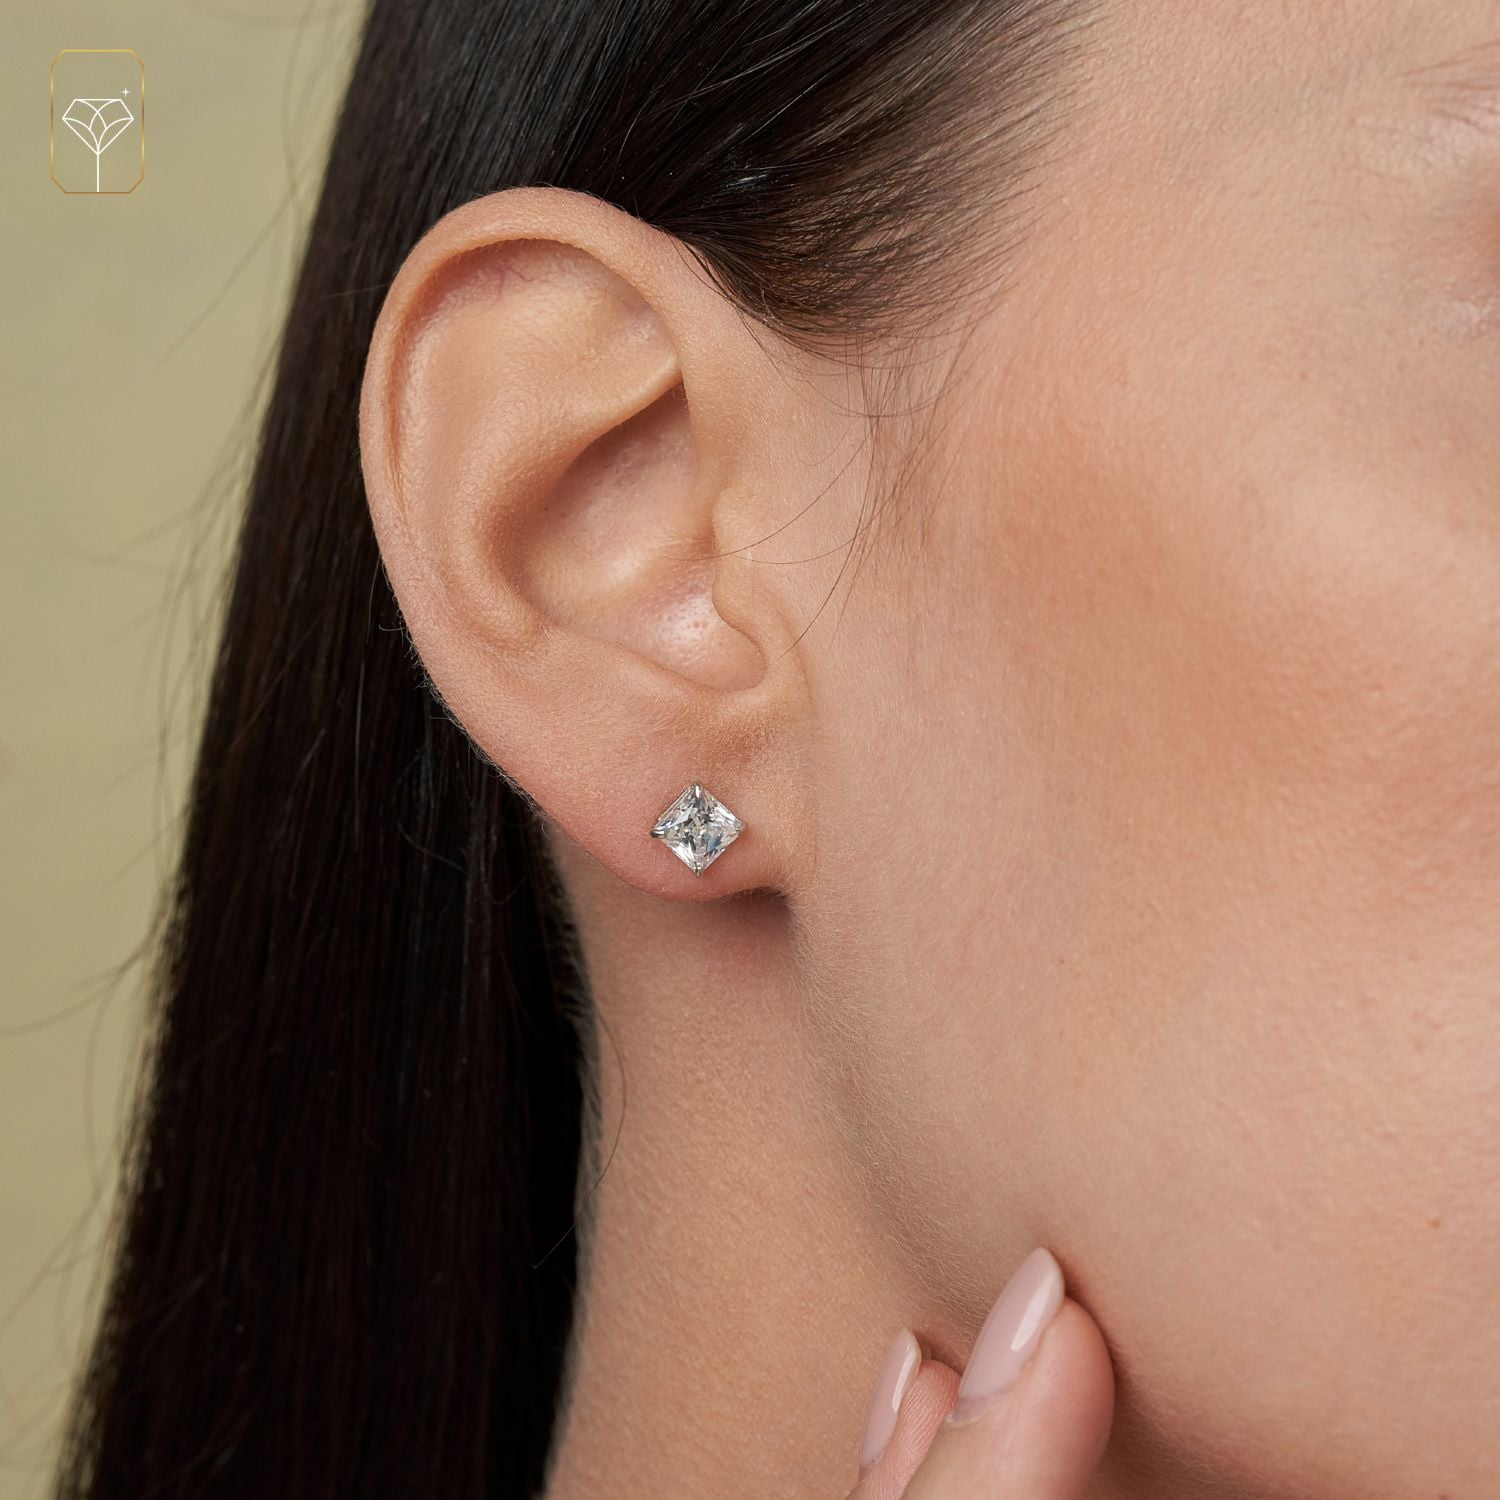 Swarovski Black Diamond Stud Earrings for Men & by DaisyBellBeads, $10.00 |  Black diamond jewelry, White gold earrings studs, Rose gold earrings studs